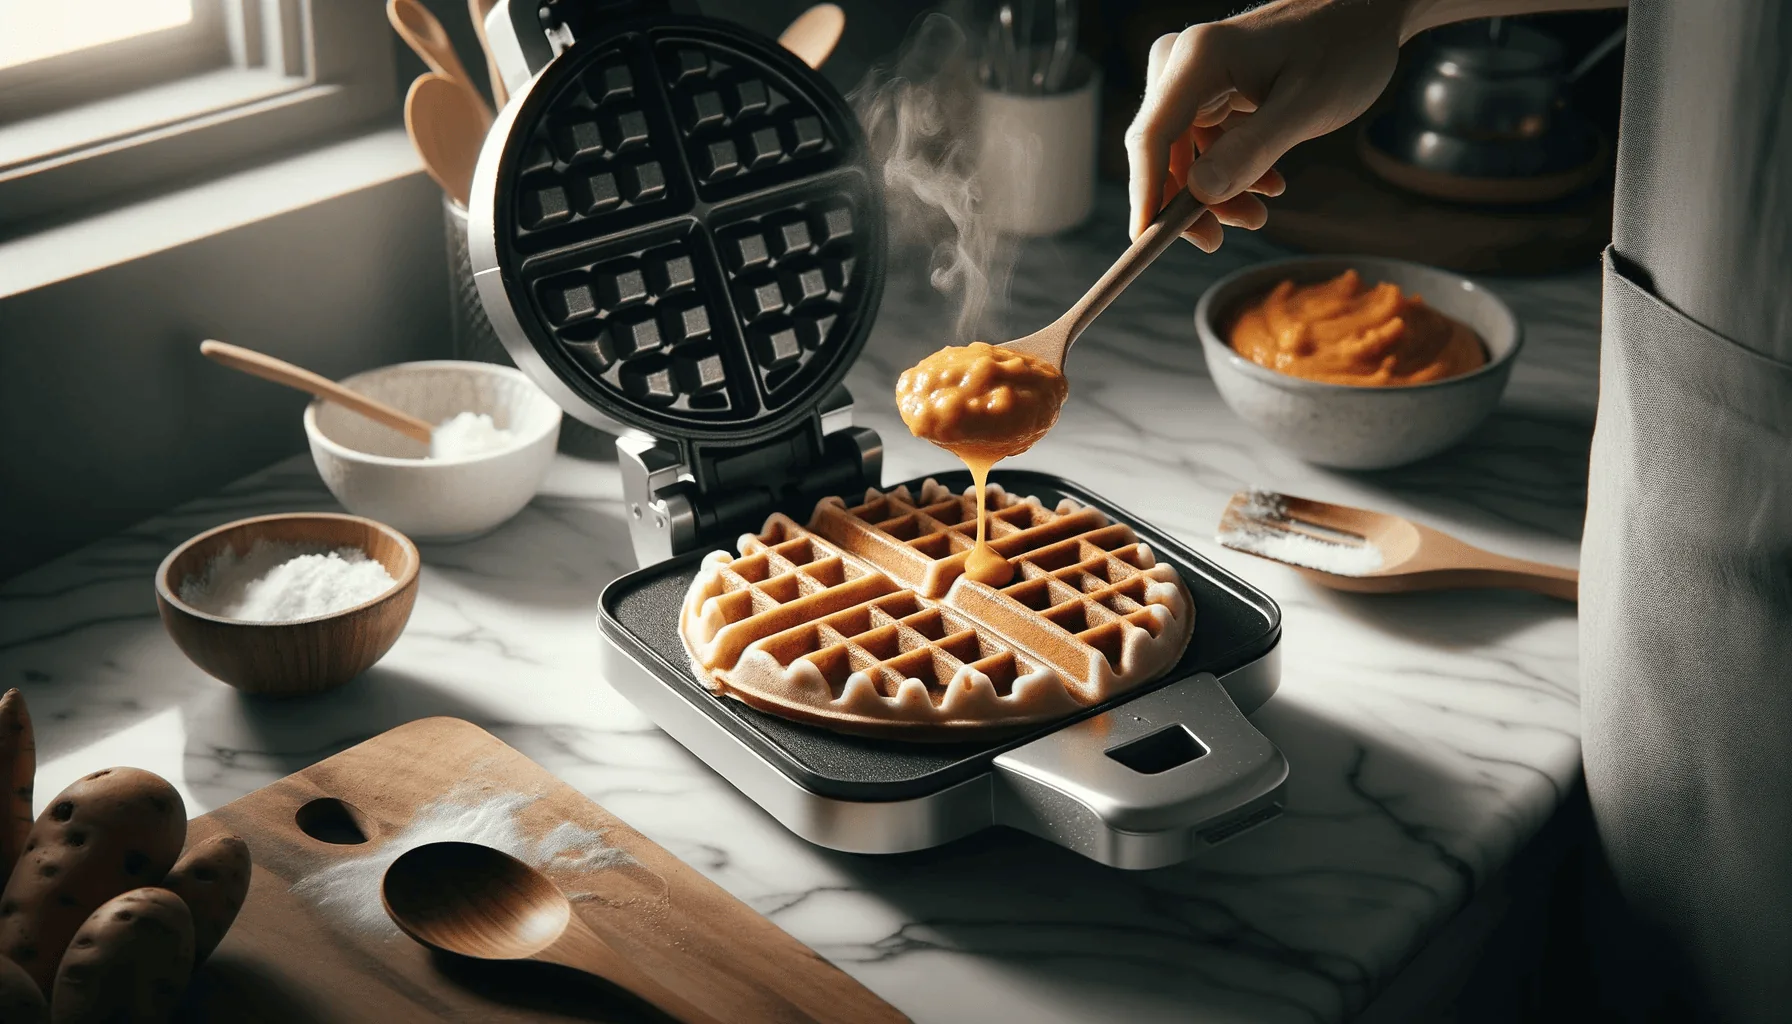 The making of sweet potato waffles